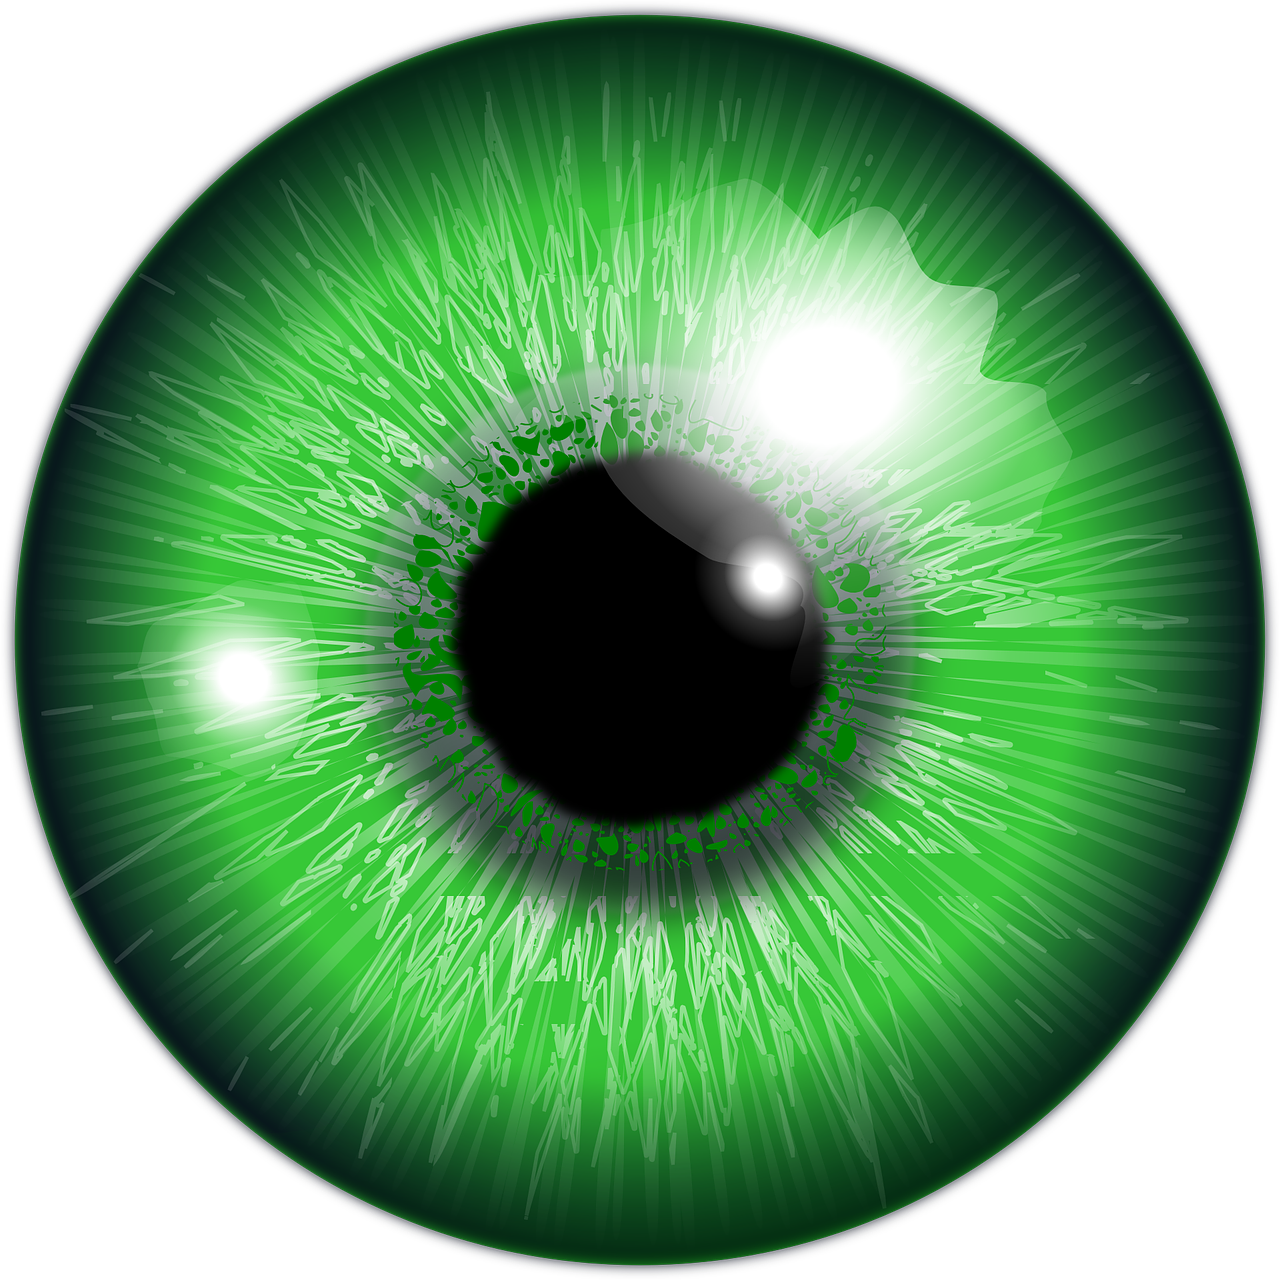 Download free photo of Eye,green,iris,eyeball,looking - from needpix.com